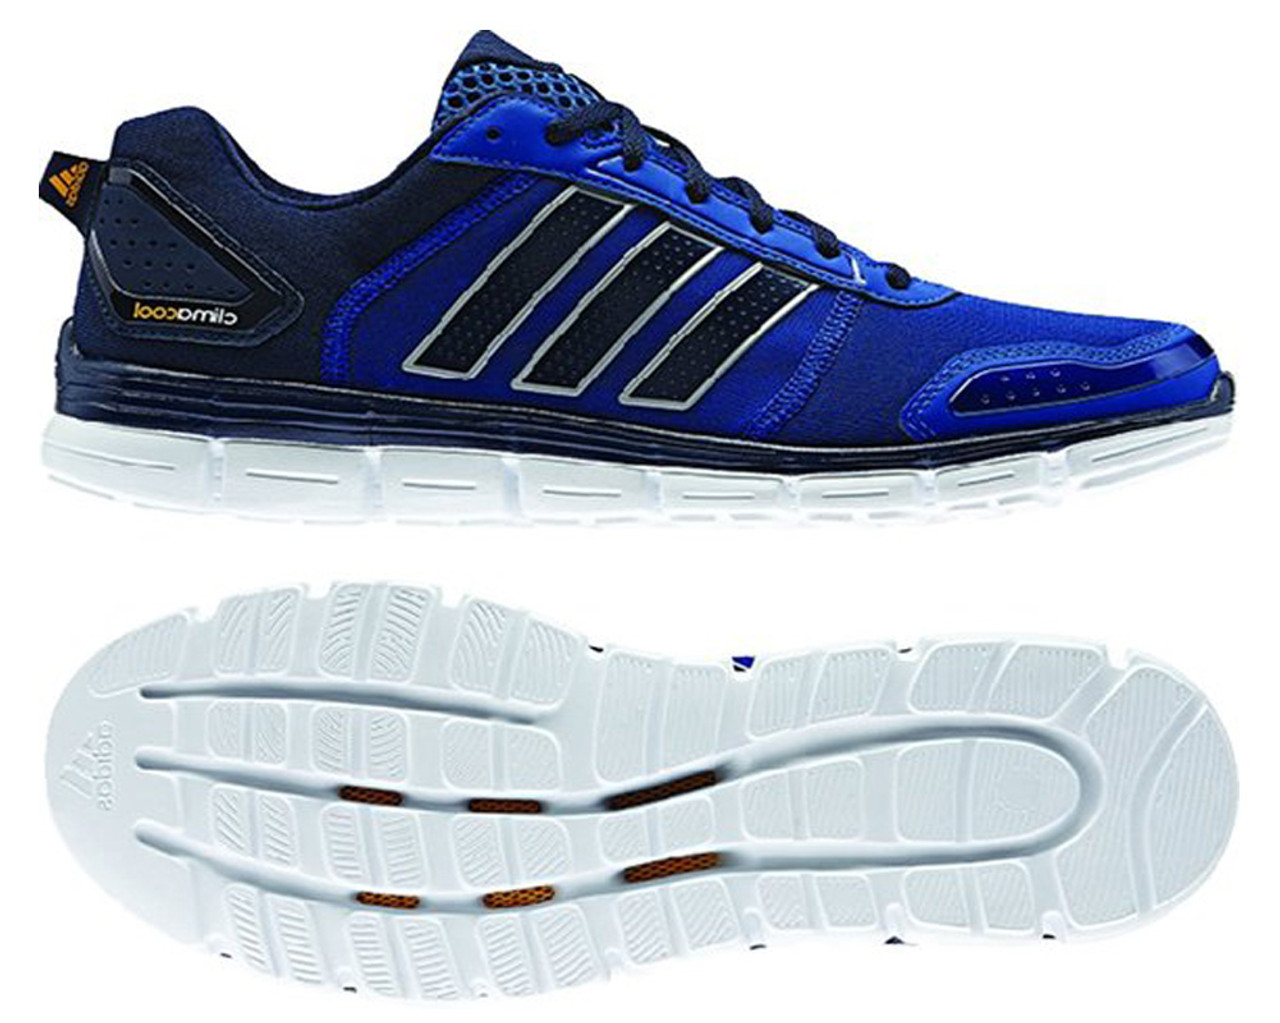 Adidas Climacool Aerate 3 Running Shoes - Blue Discount Adidas Men's Athletic Shoes & More - Shoolu.com | Shoolu.com